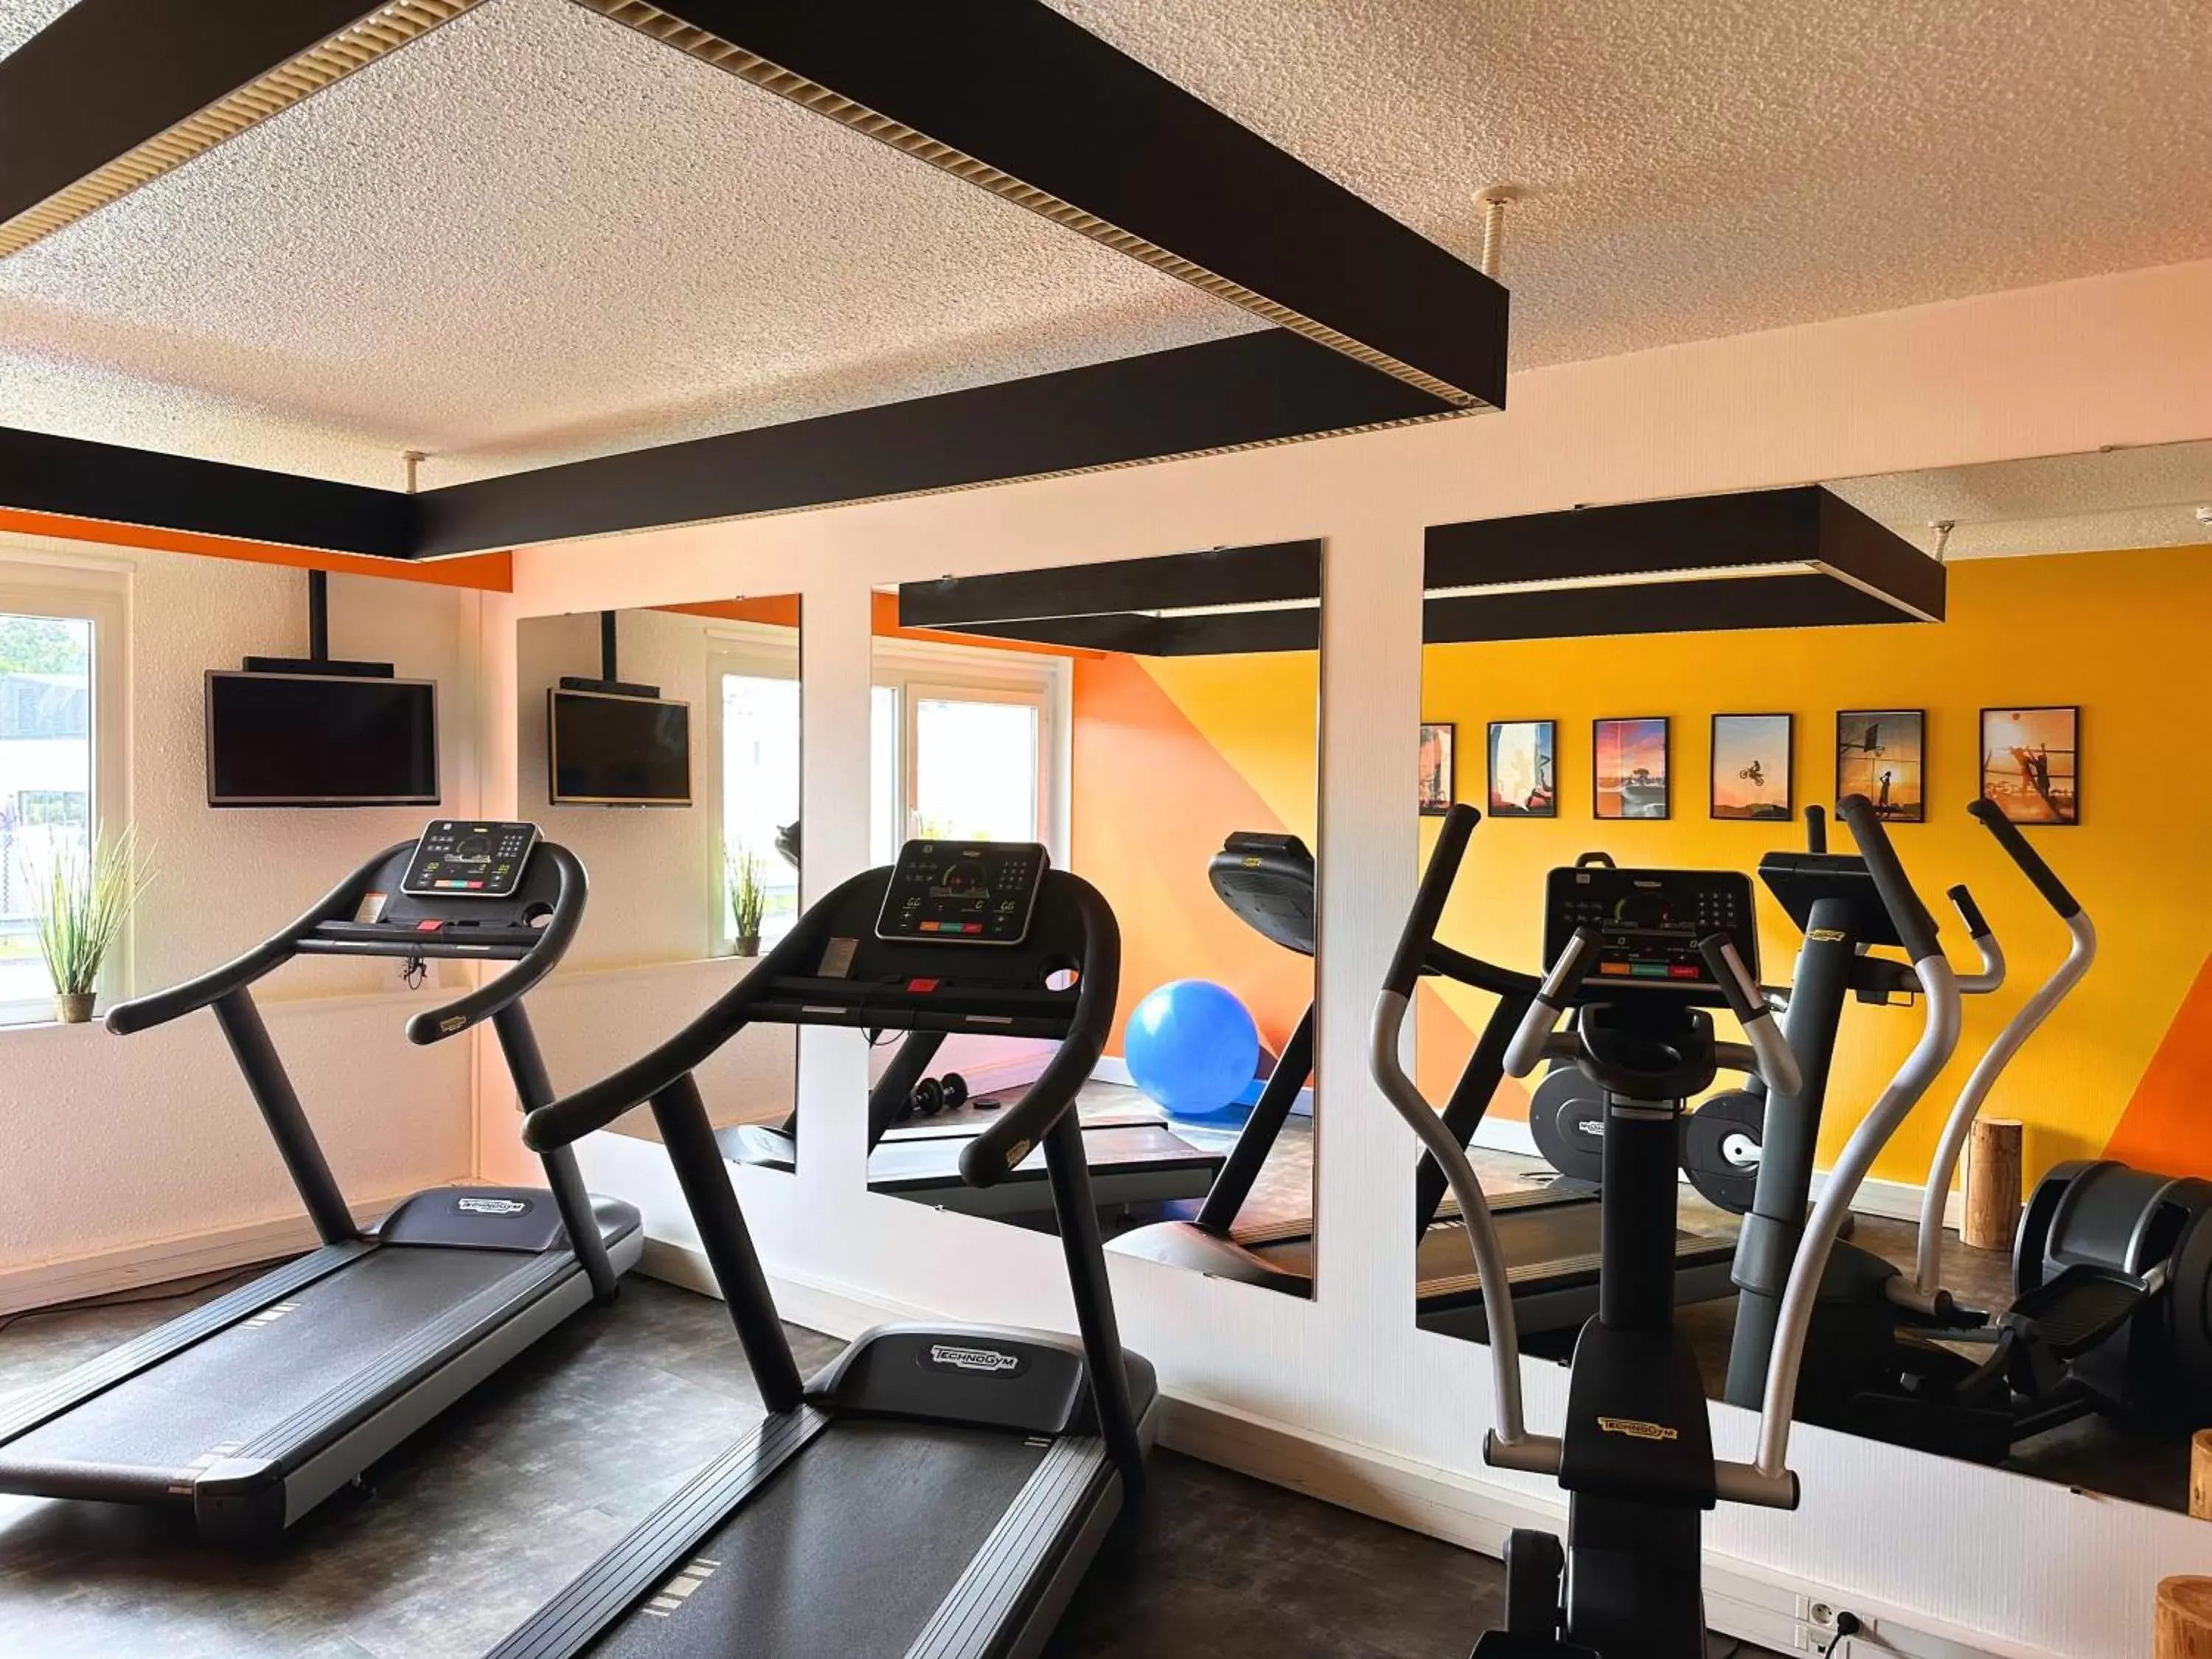 Fitness centre/facilities, Fitness Center/Facilities in Novotel Bordeaux Mérignac